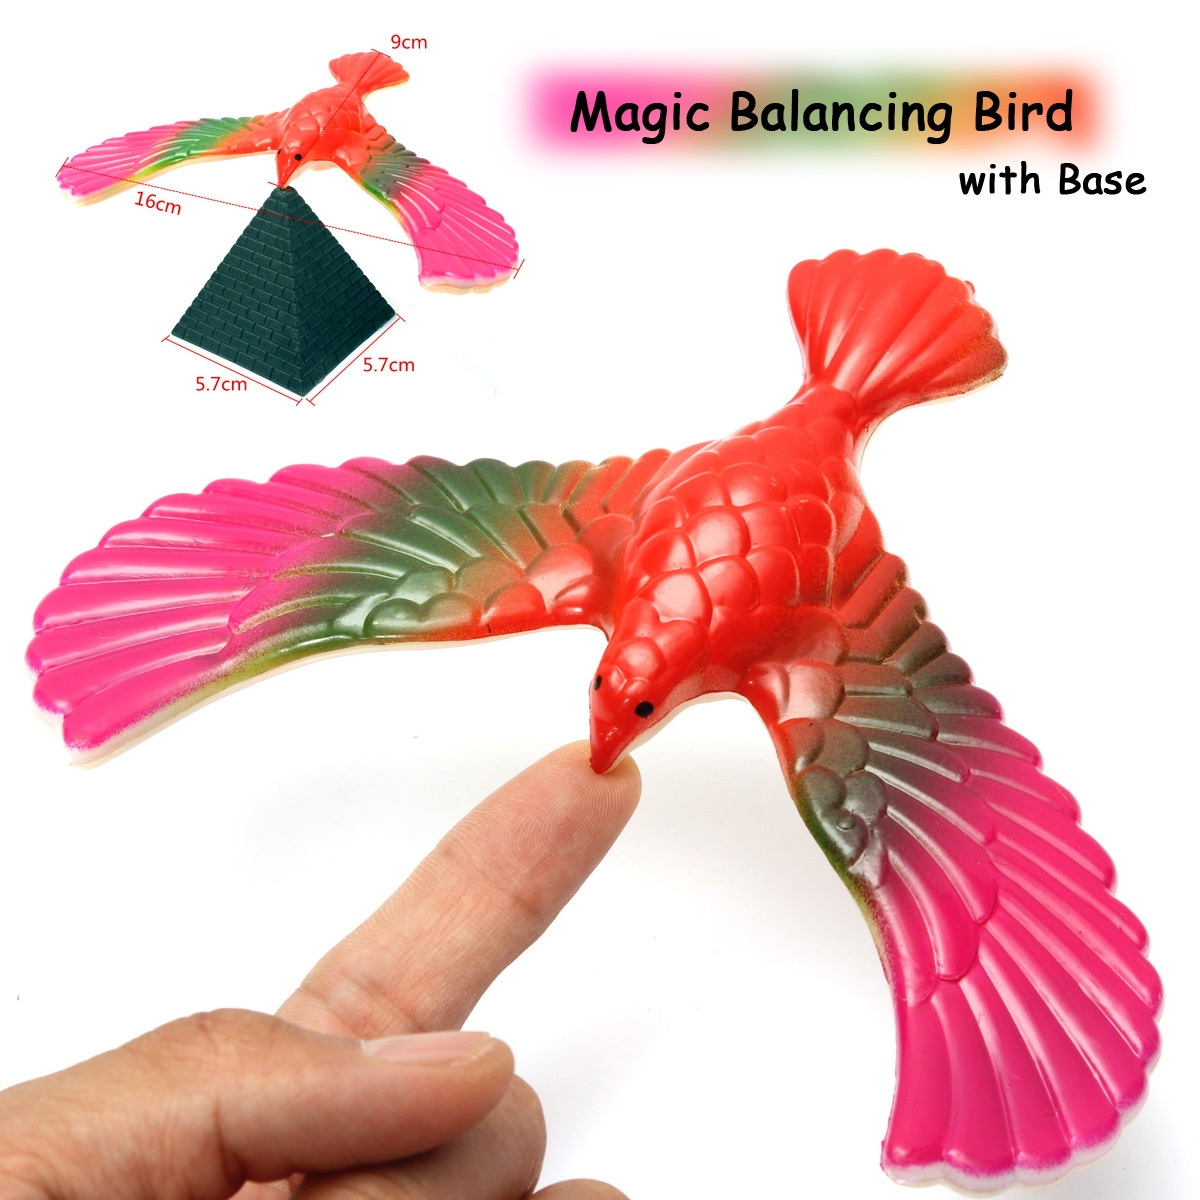 Magic Balancing Bird Science Desk Toy Novelty Fun Learning Gag Gift 